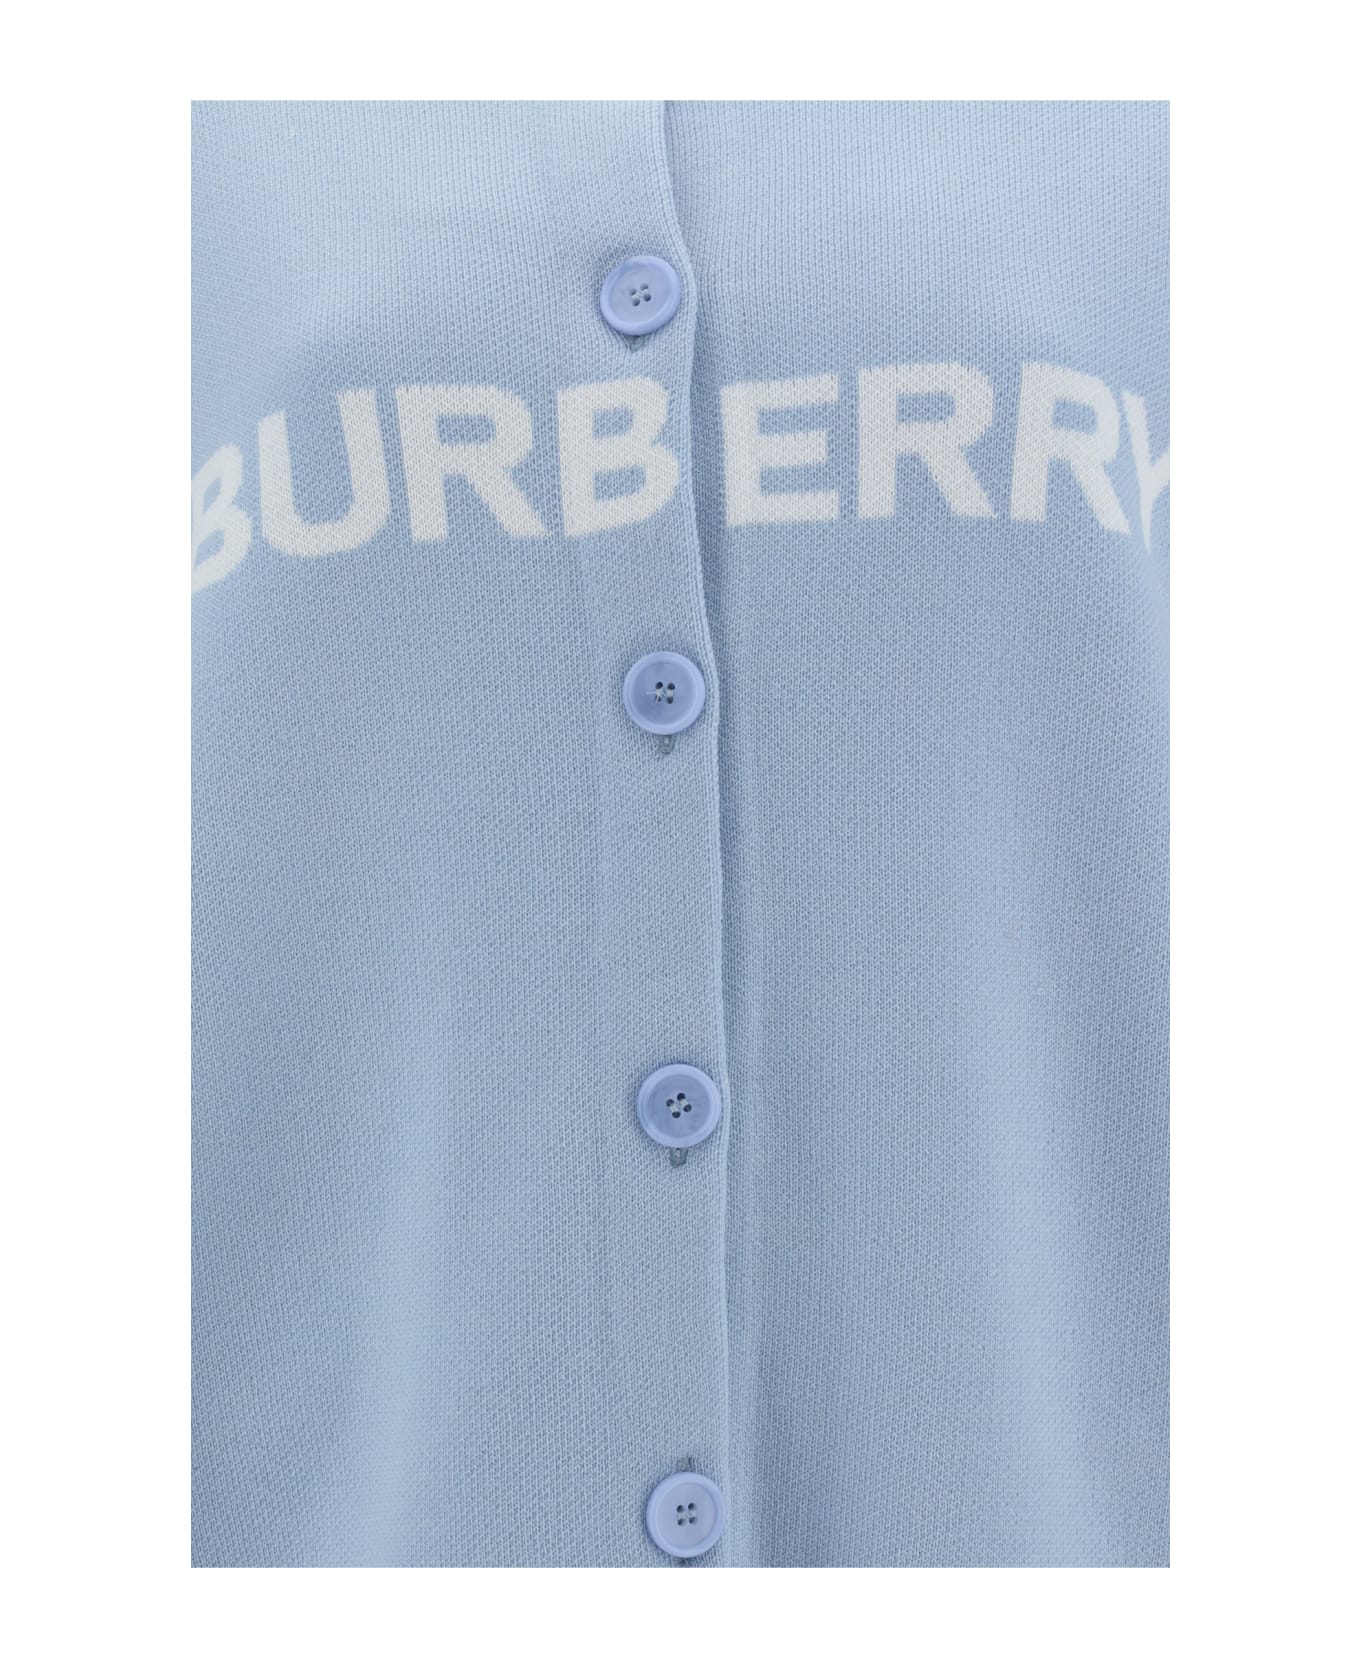 Burberry Dottie Cardigan - Pale Blue